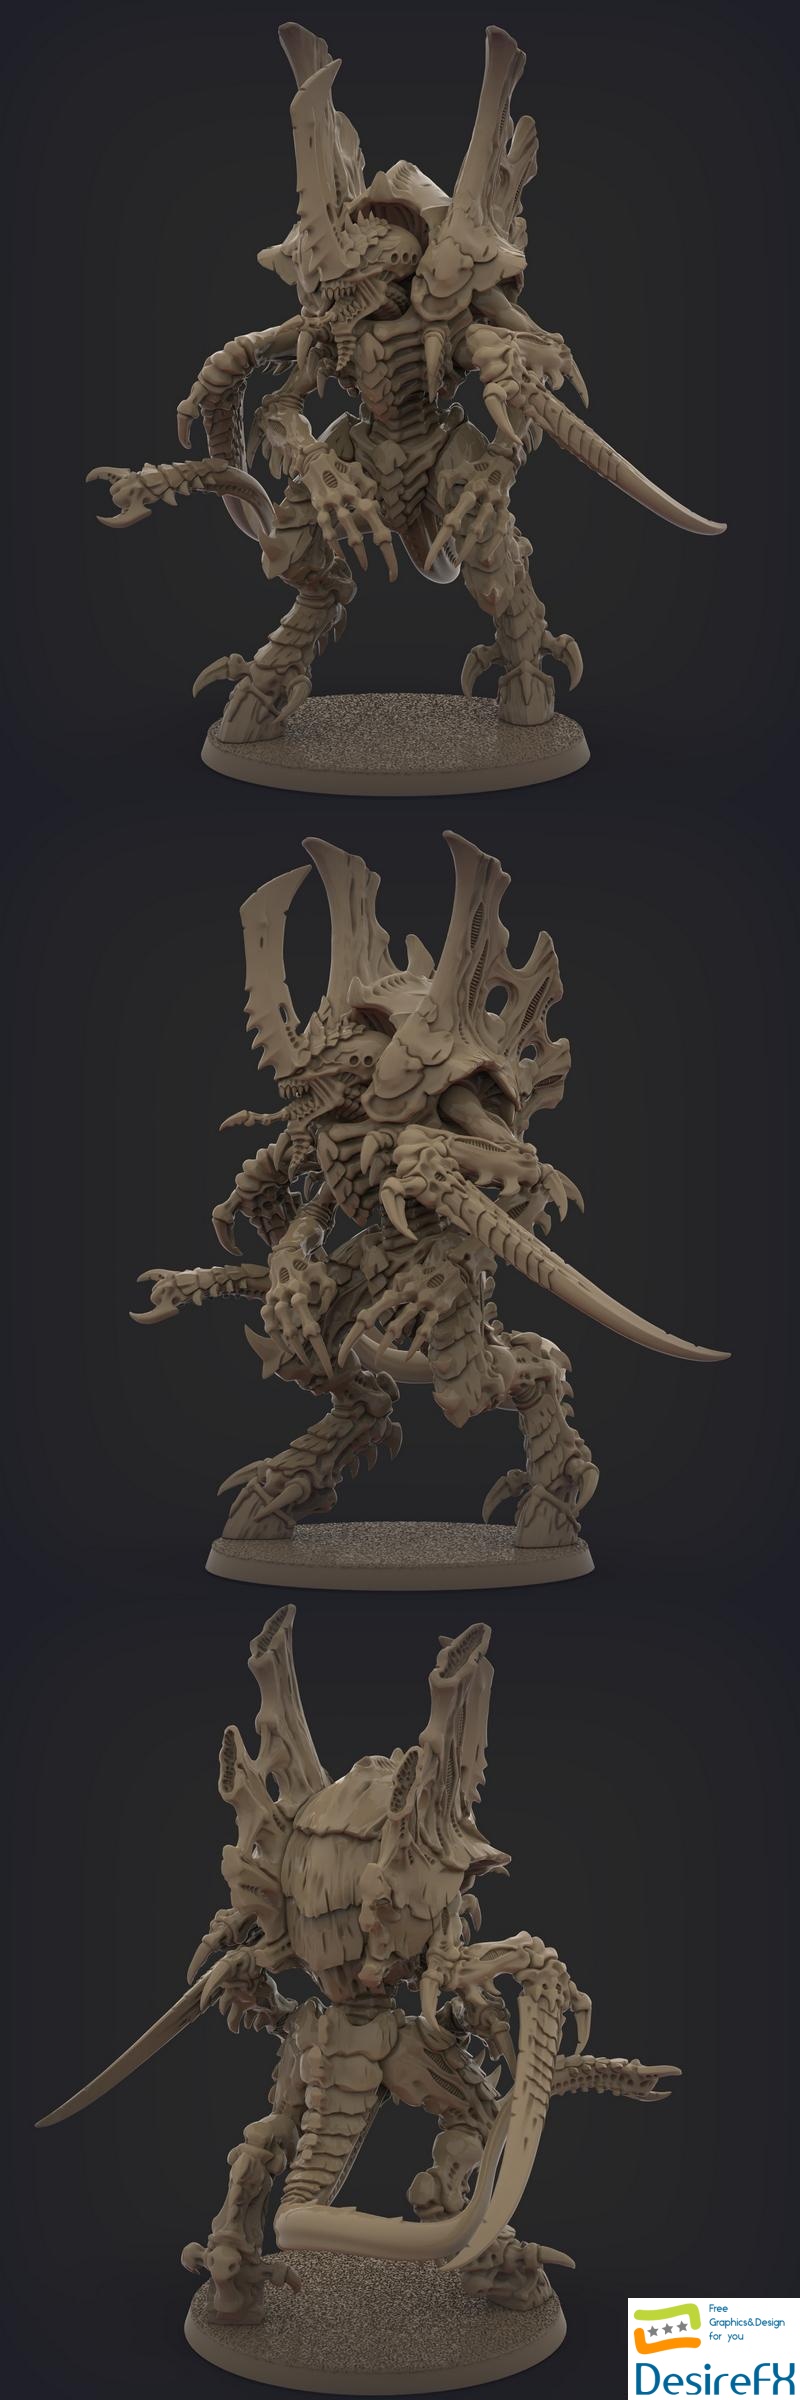 Hive Tyrant - 3D Print